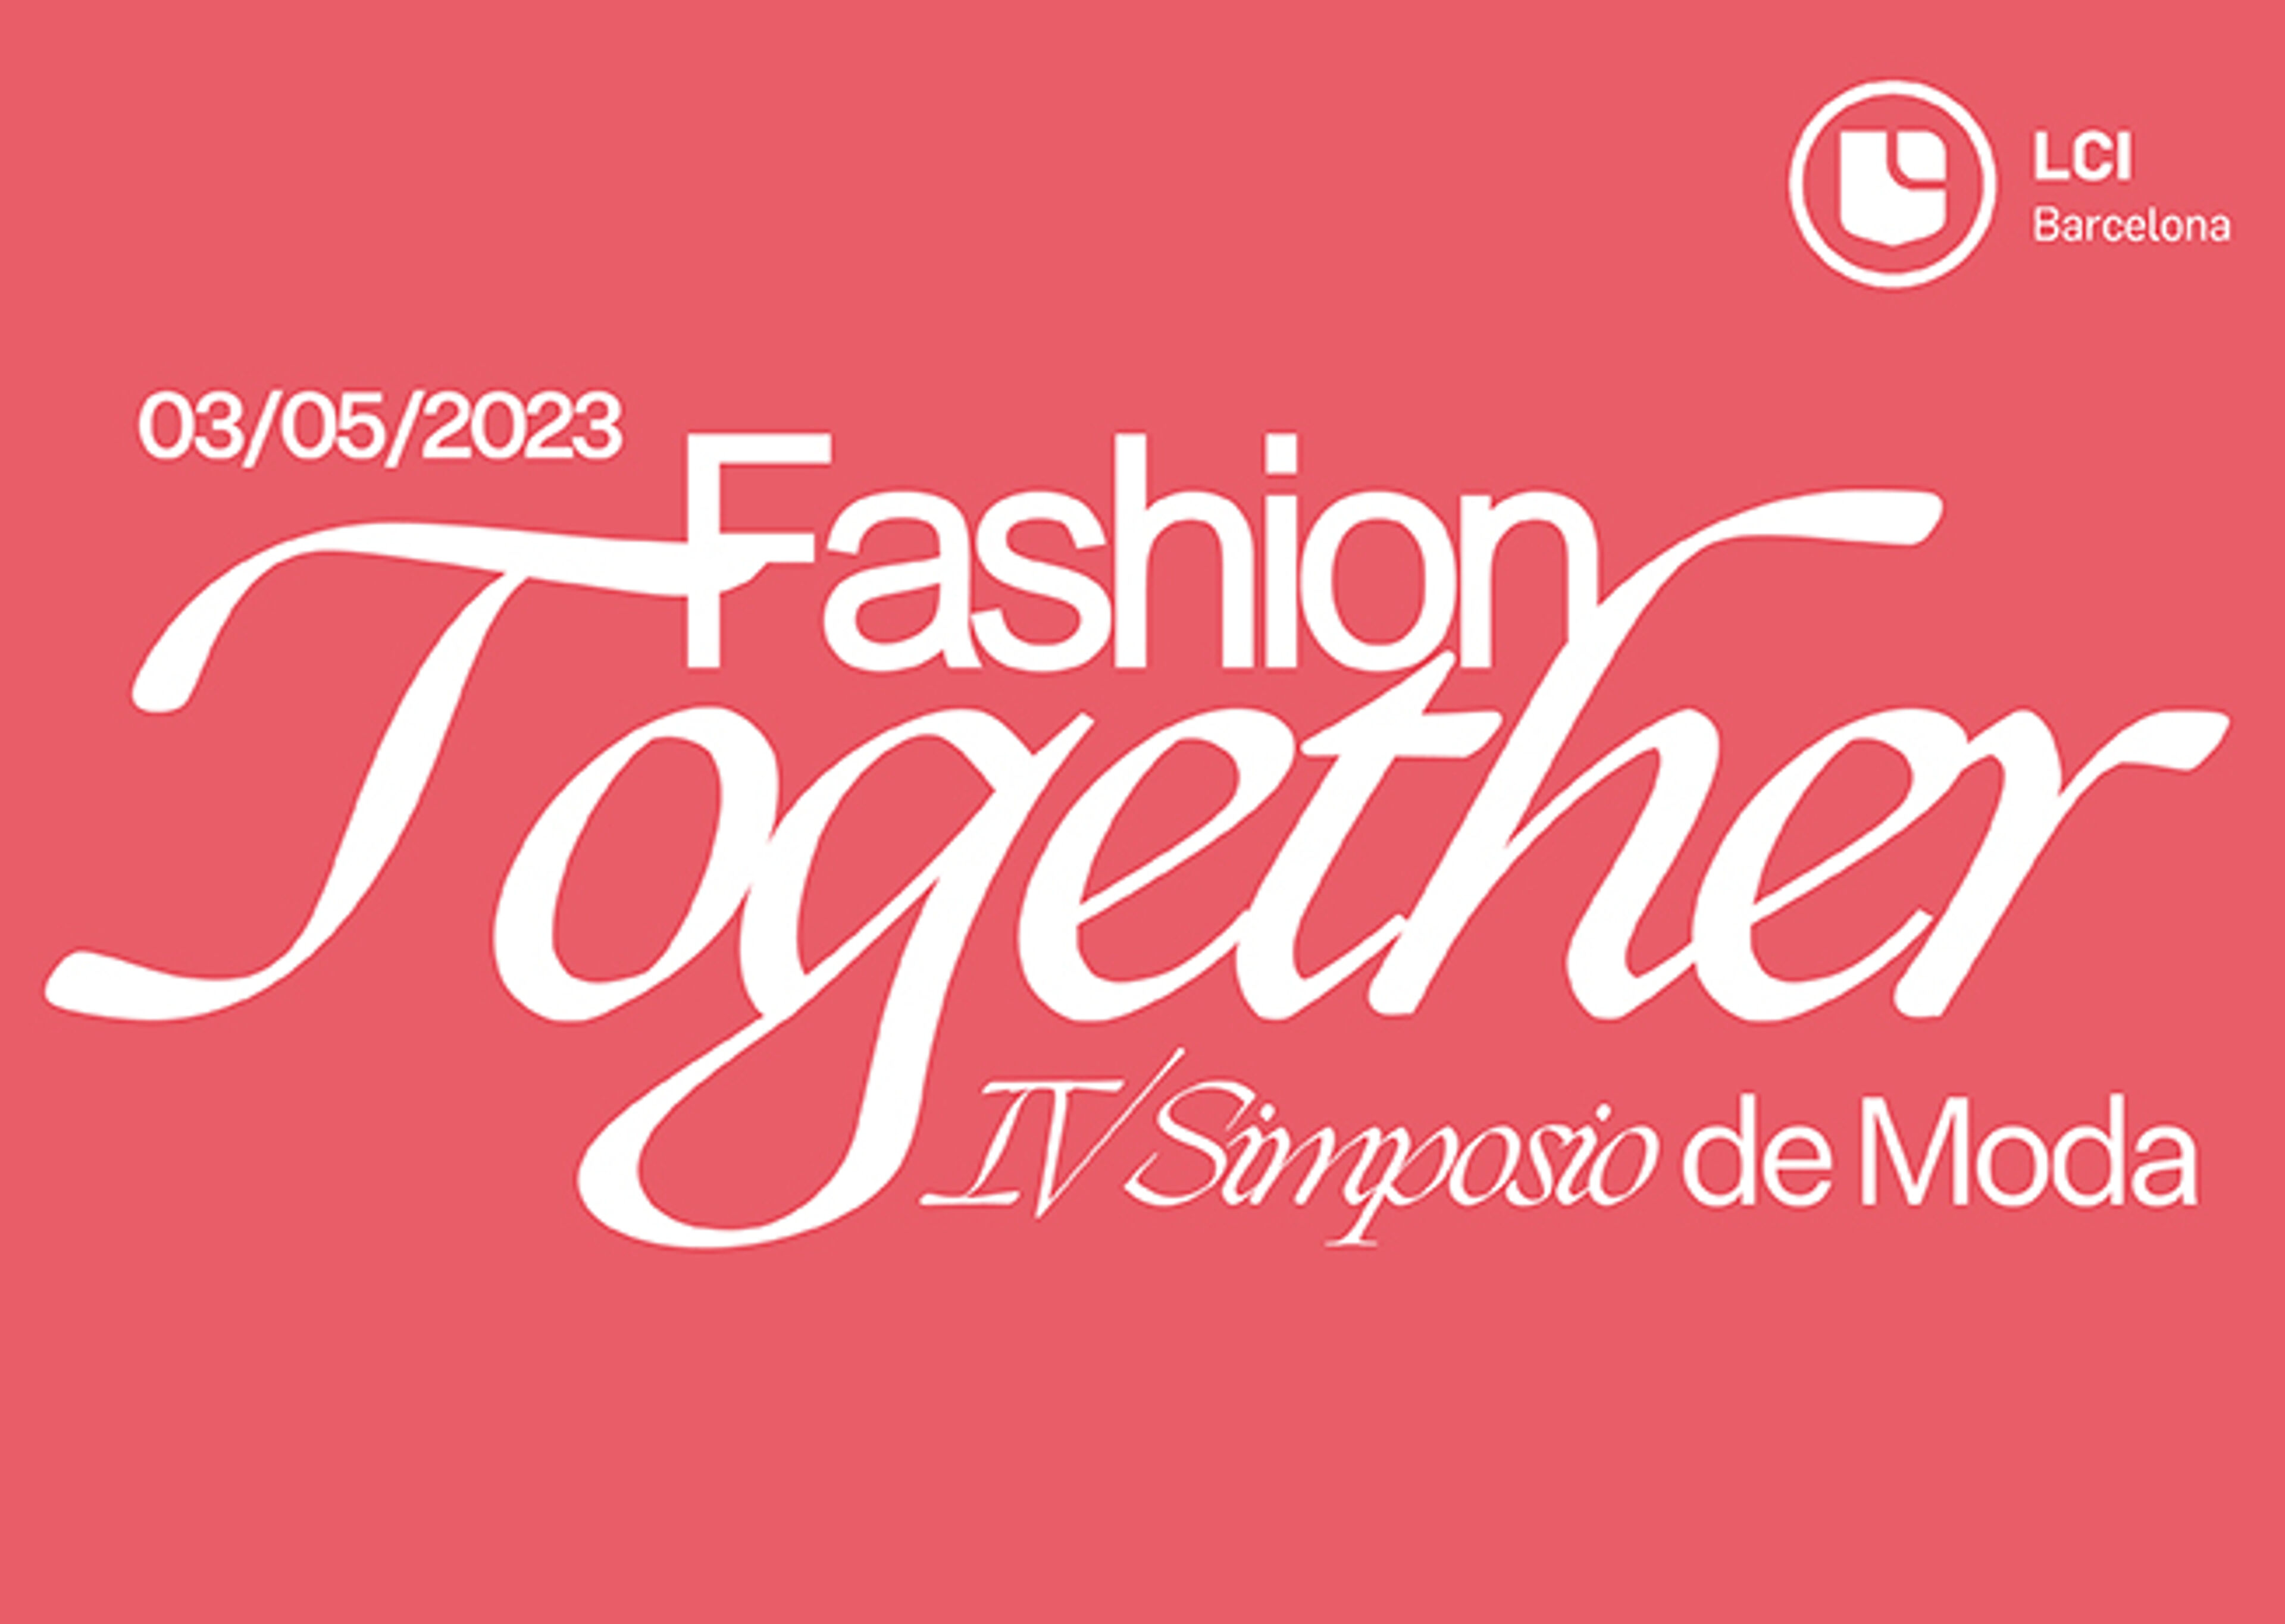 Pòster promocional de l'esdeveniment 'Fashion Together' de LCI Barcelona, datat 03/05/2023.